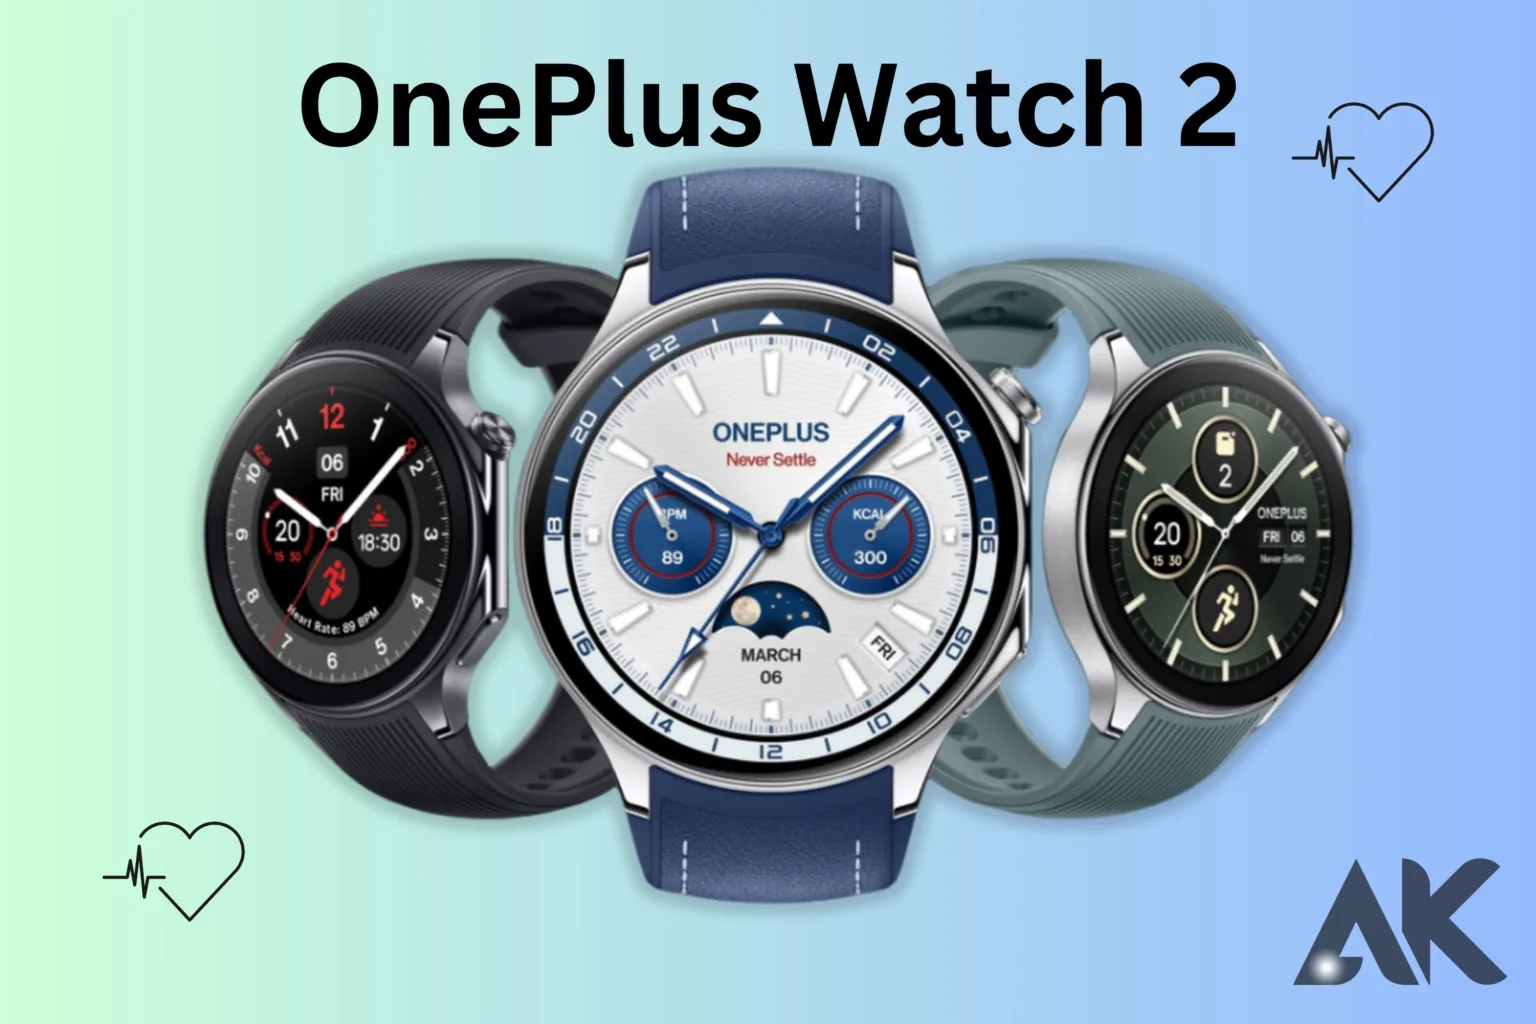 OnePlus Watch 2 Next-Gen Smartwatch with Advanced Features